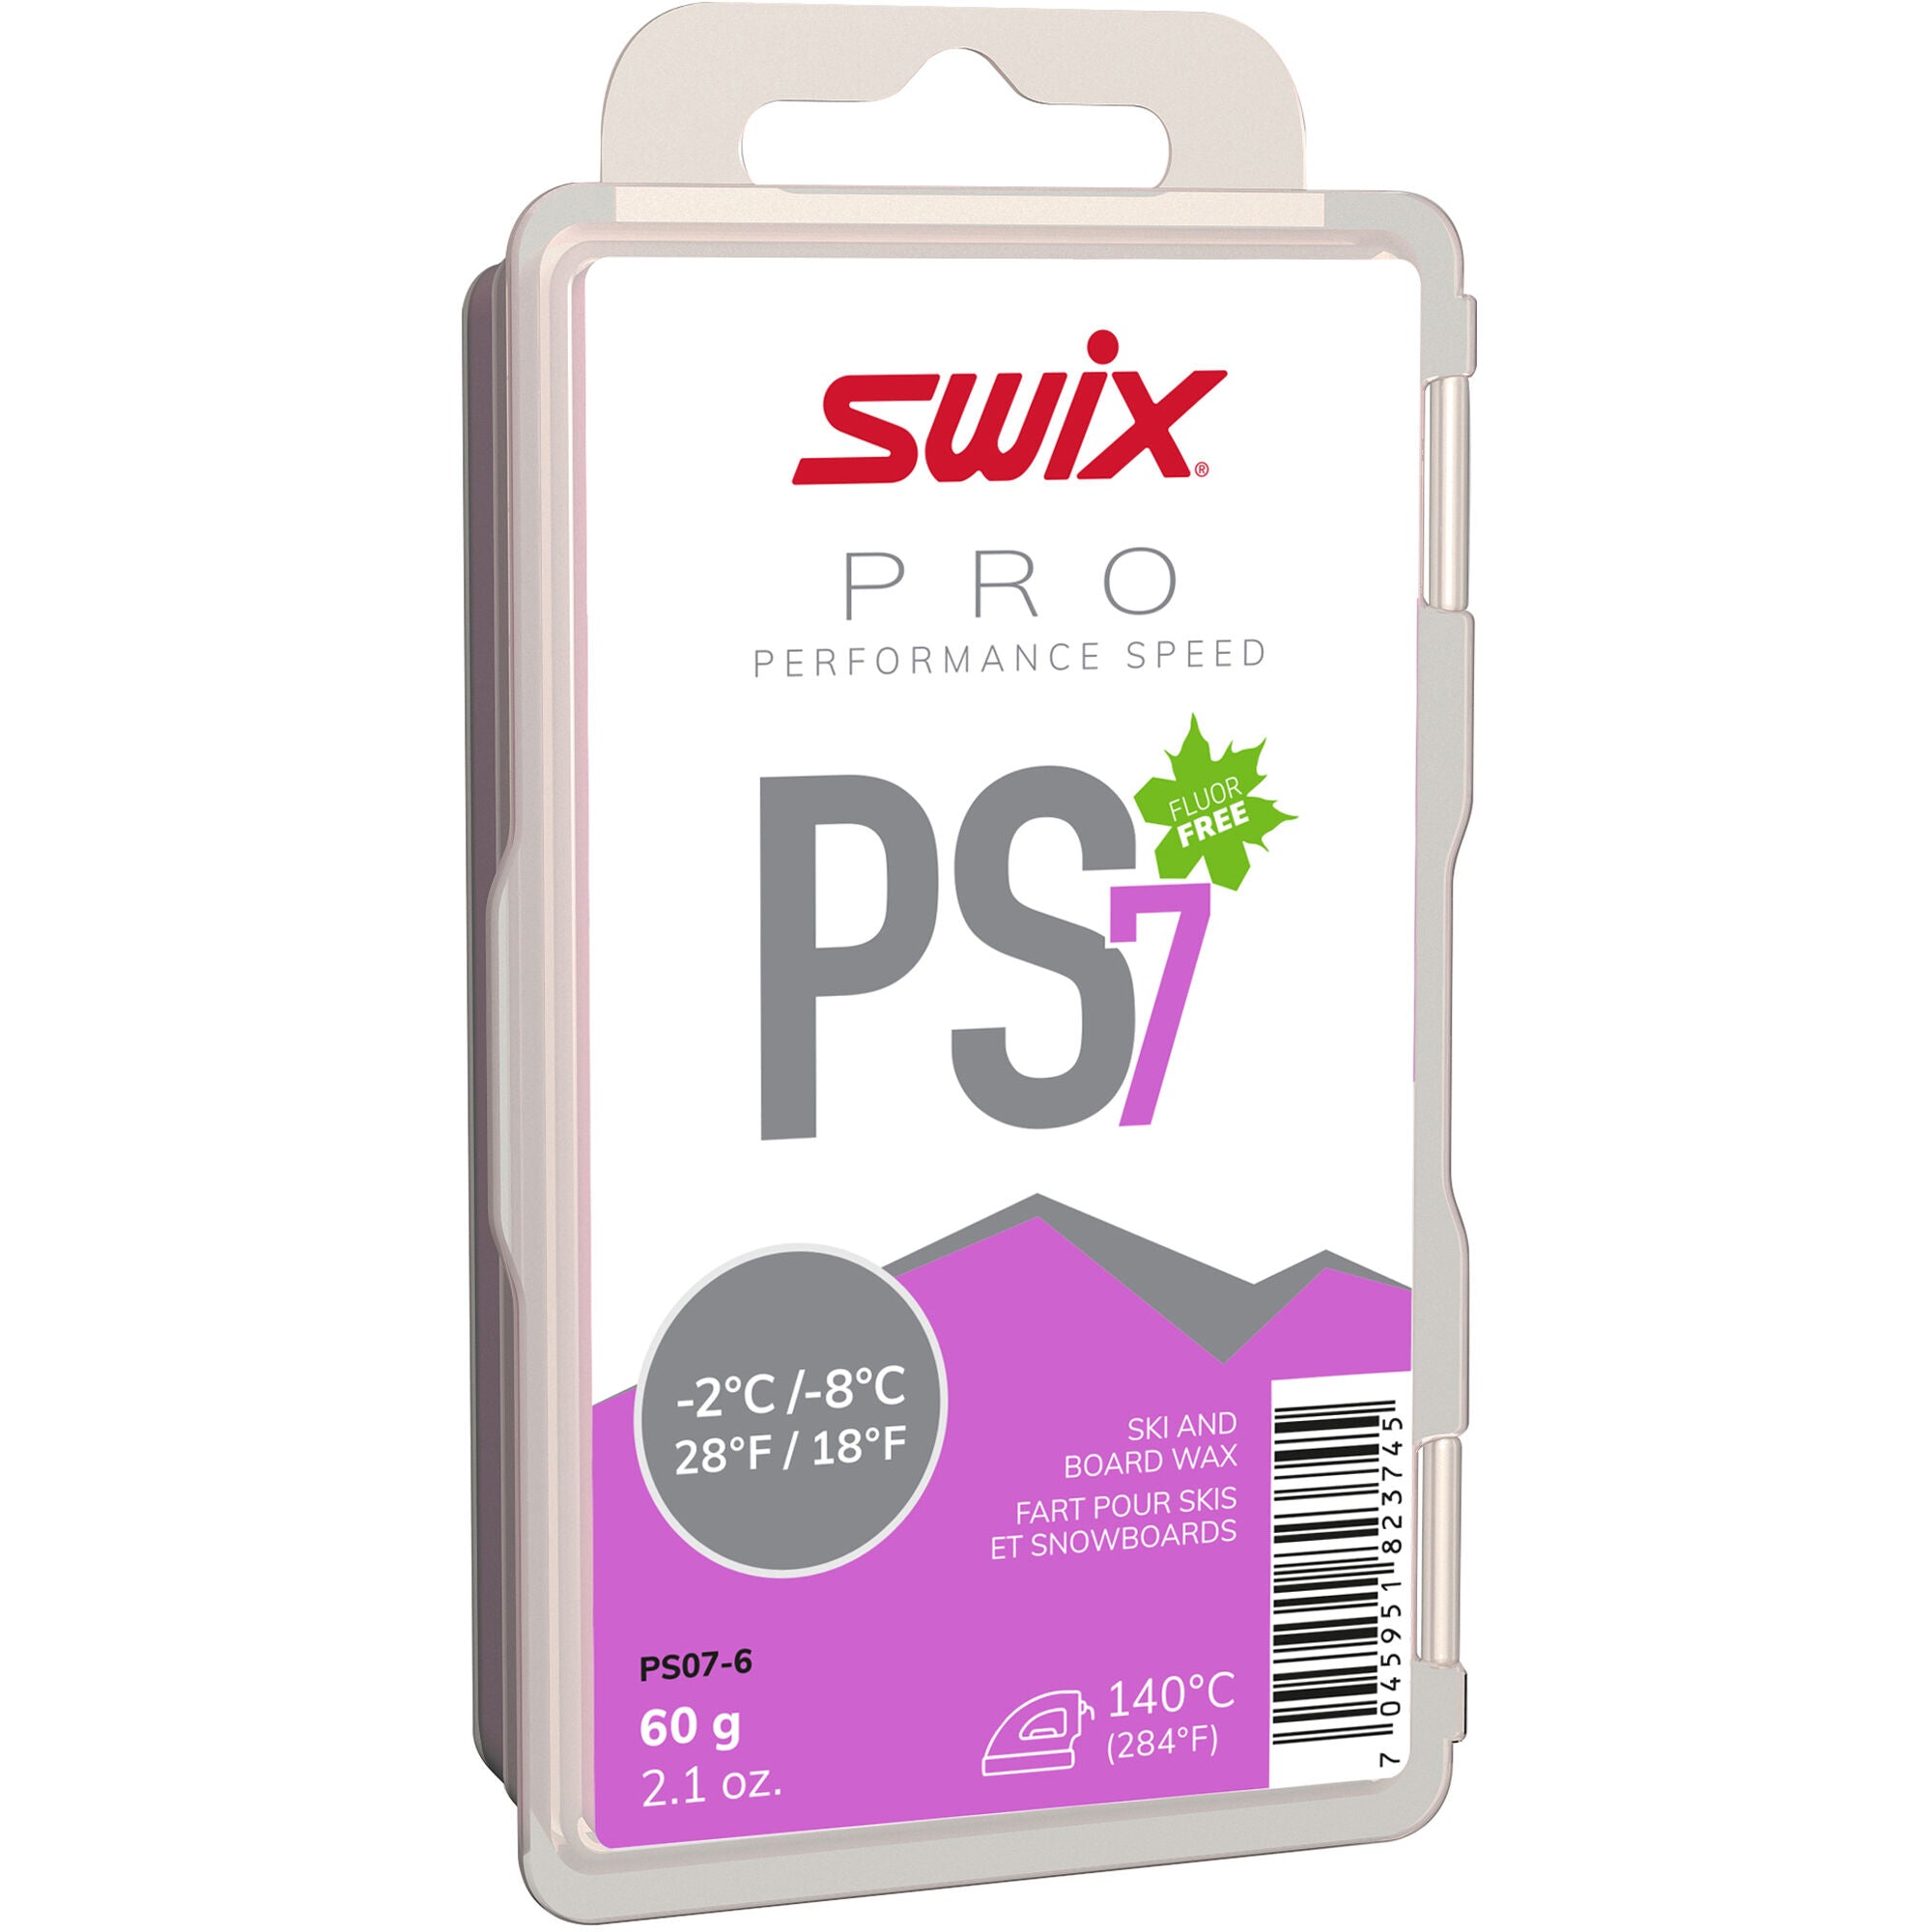 Swix Ps7 Violet